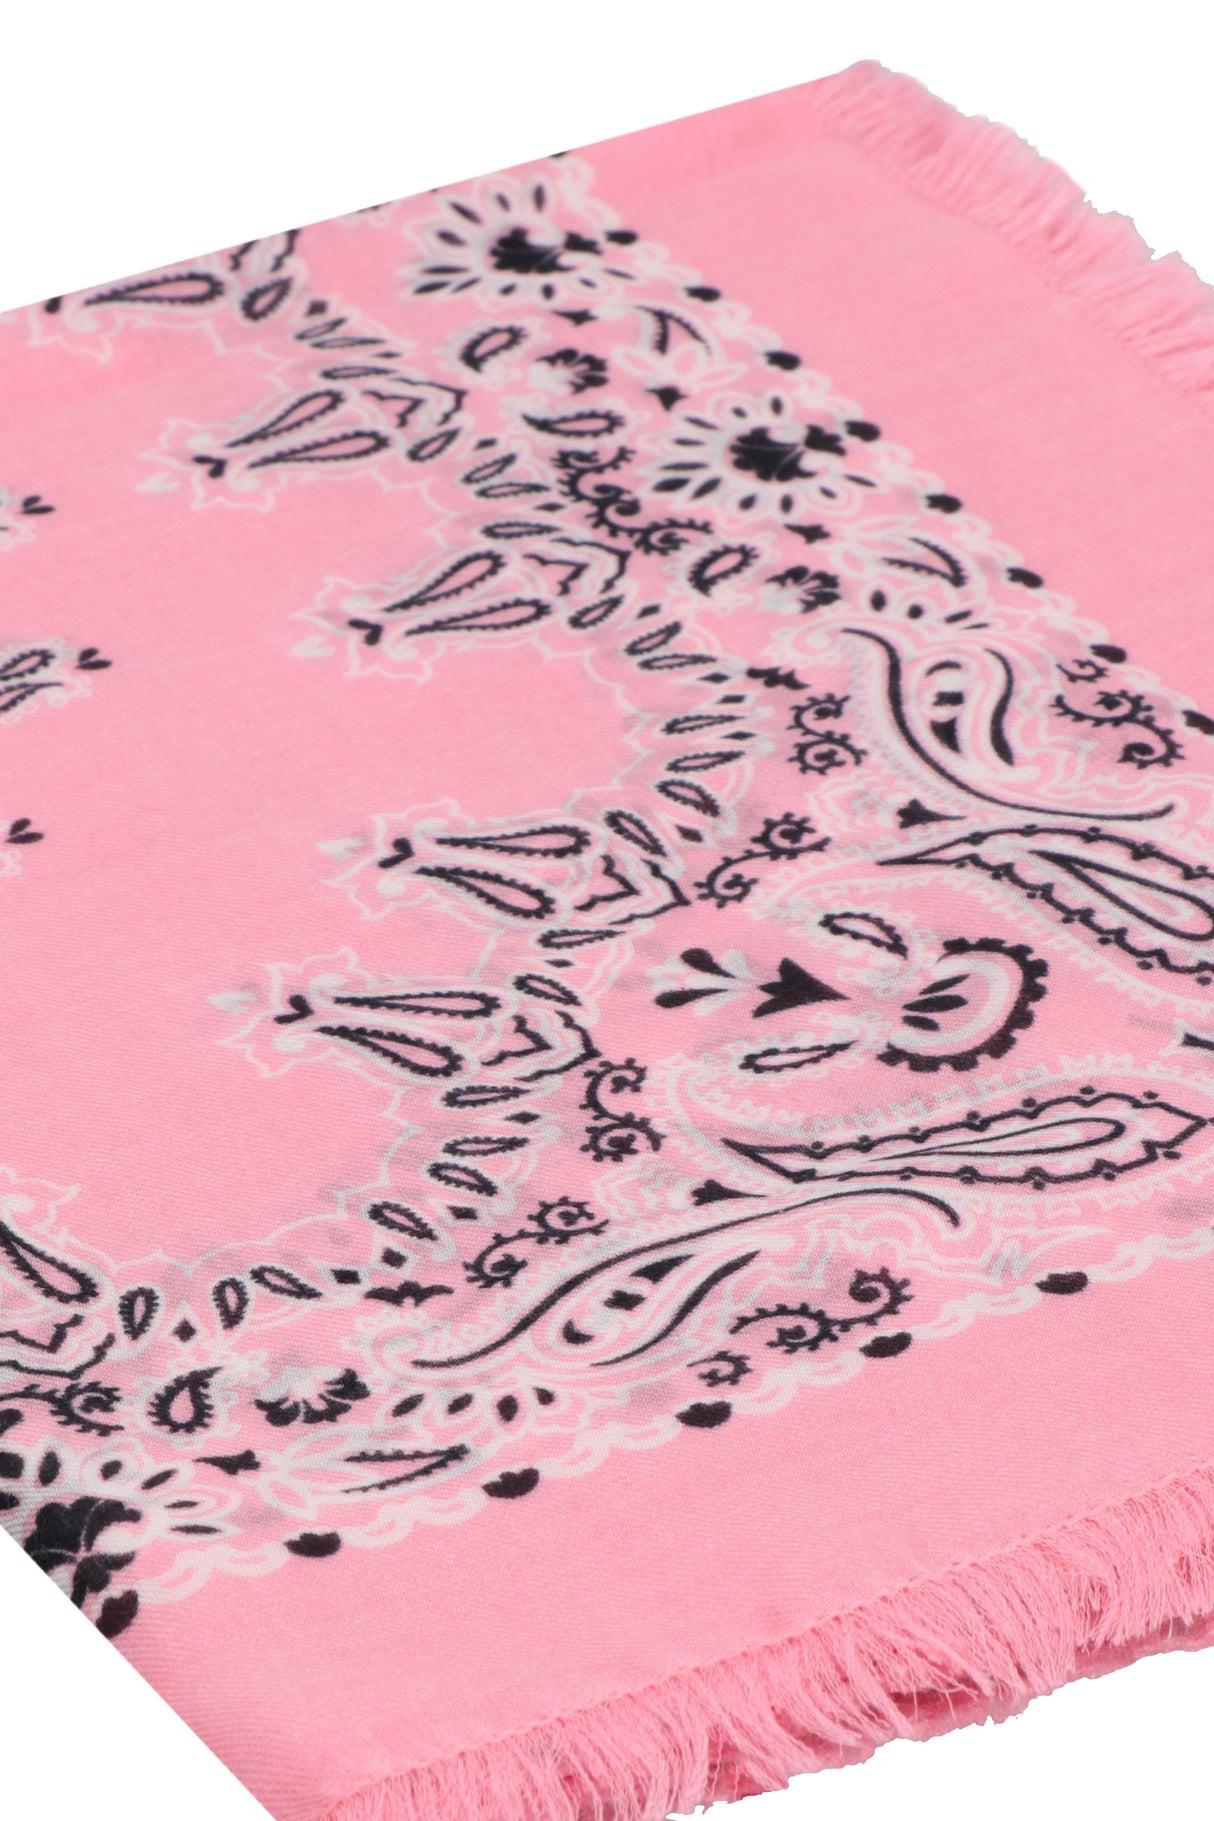 SAINT LAURENT Frayed Edges Pink Scarf for Women - Size 145x160 cm, SS22